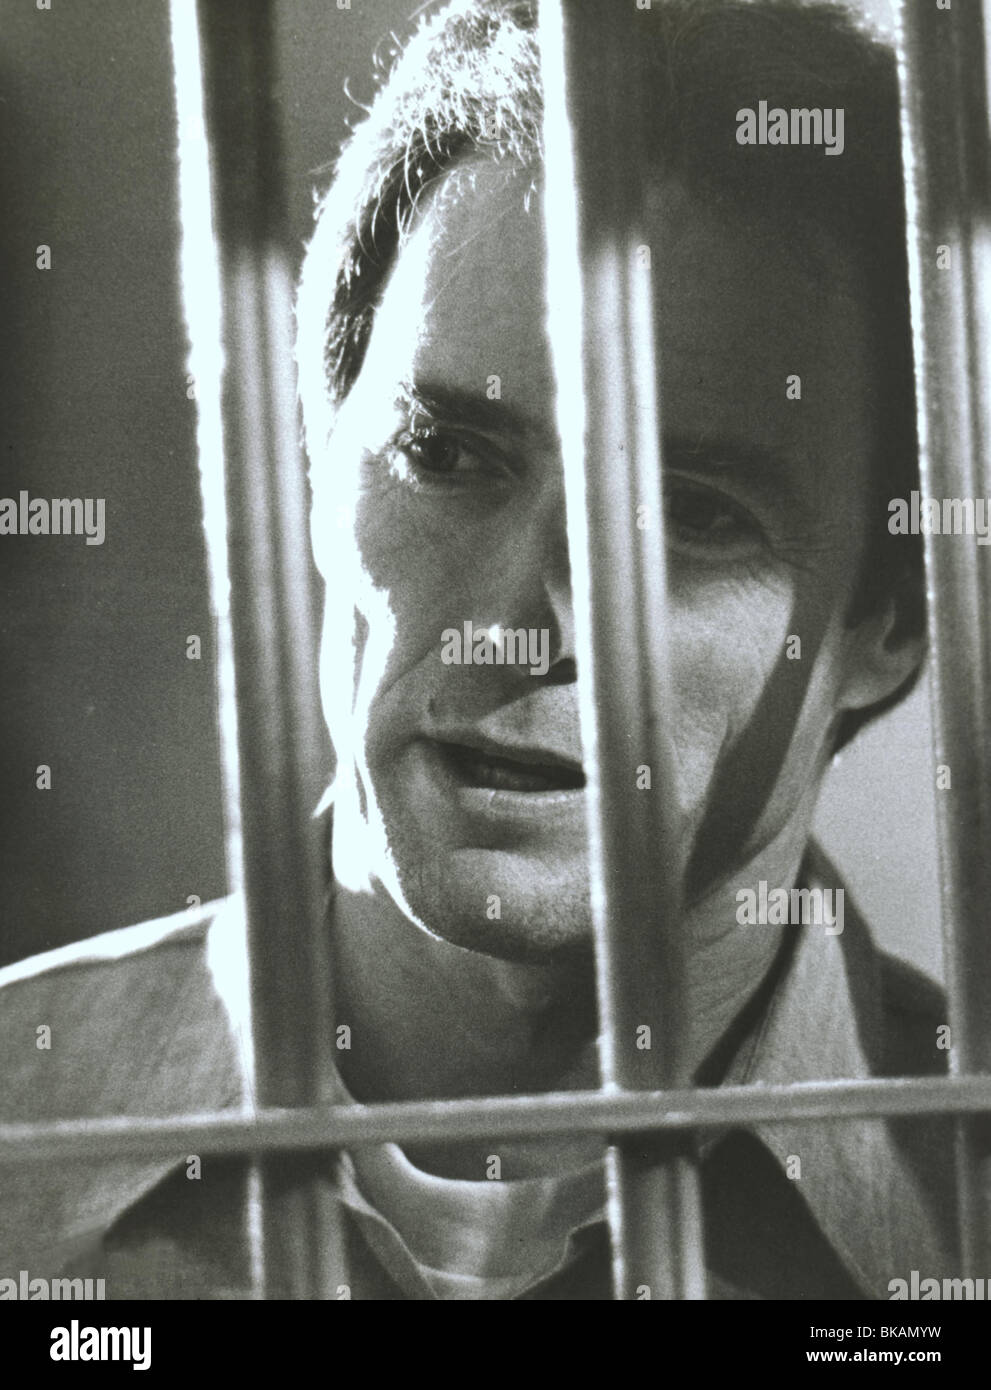 S'échapper d'Alcatraz (1979) CLINT EASTWOOD ALE 012P Banque D'Images